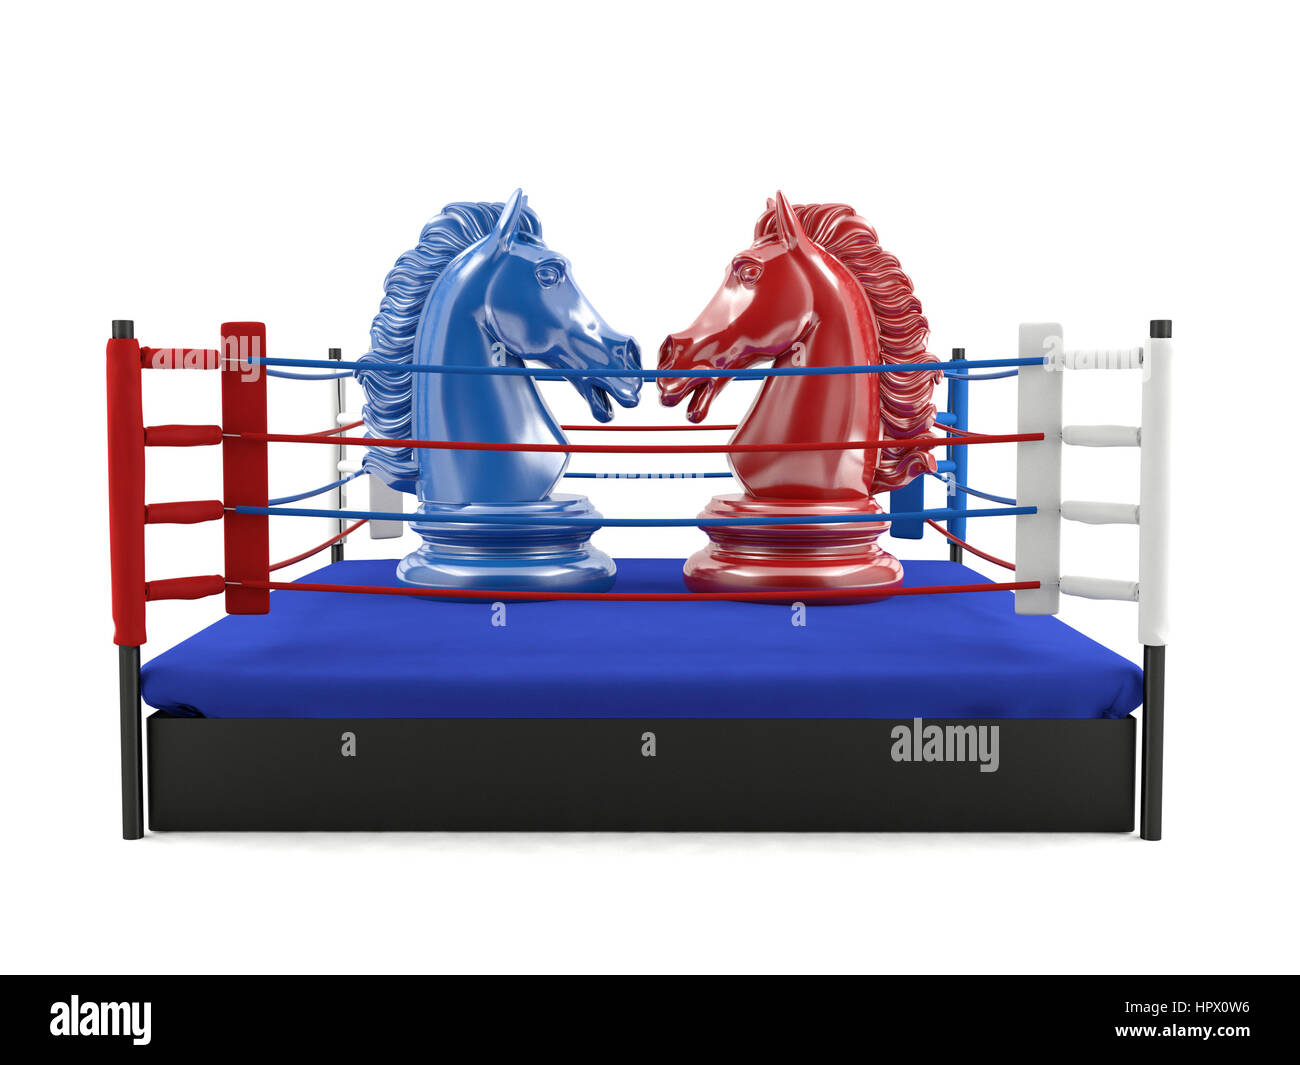 Boxing Ring Chess™️ – Boxing Ring Chess™️ is an innovative